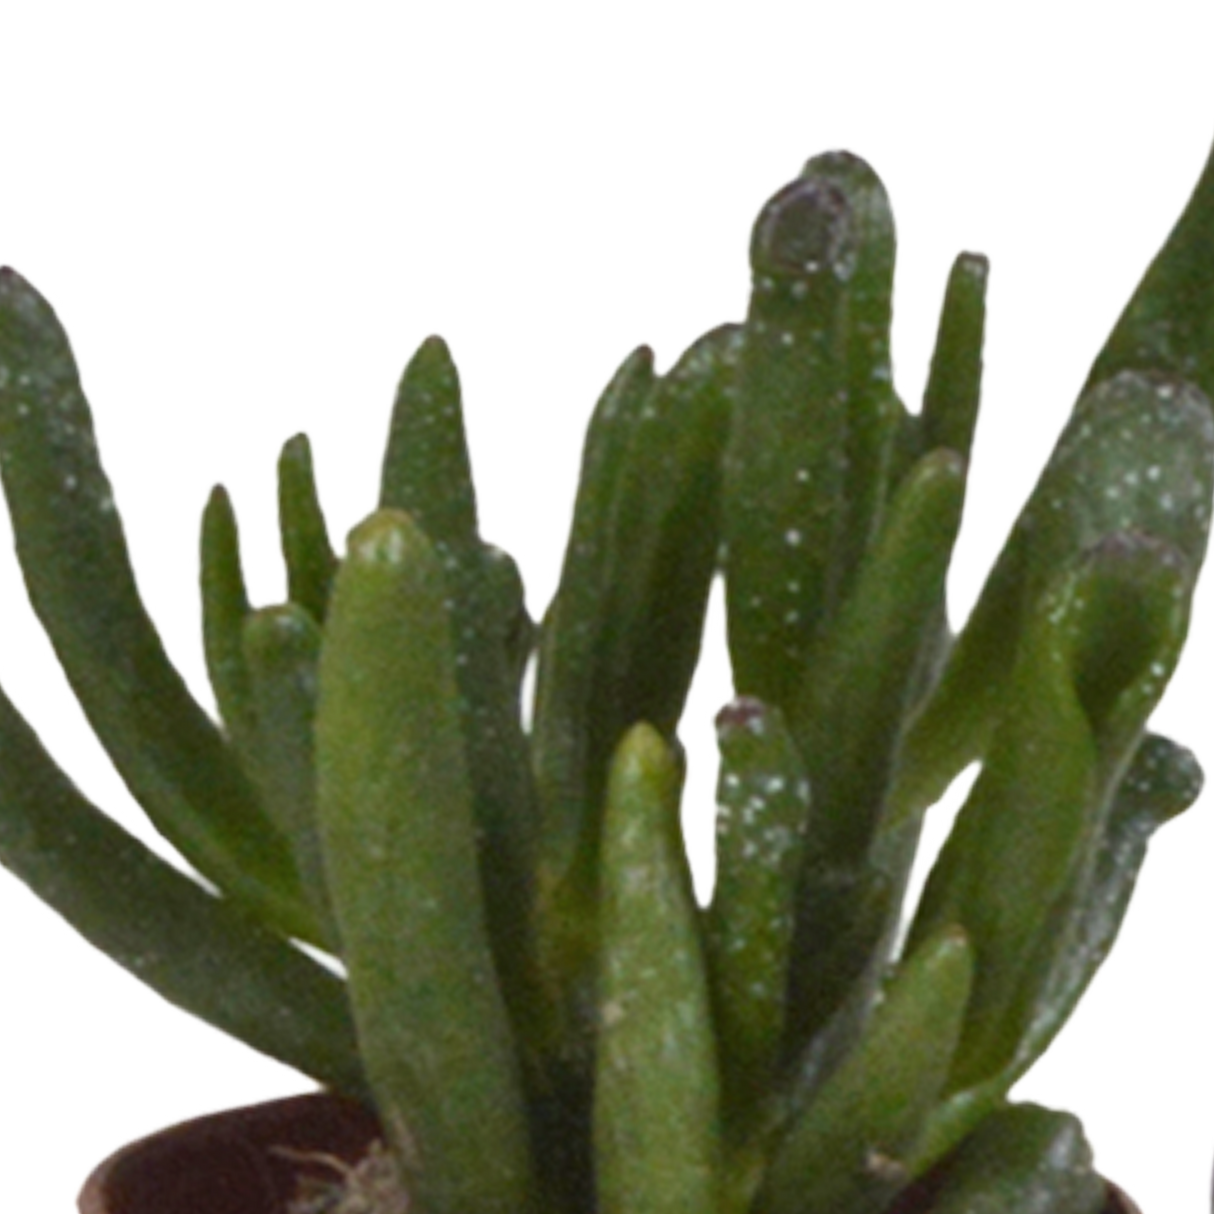 Kaktuskasse og dens hvide plantekasser - Sæt med 5 planter, h40cm